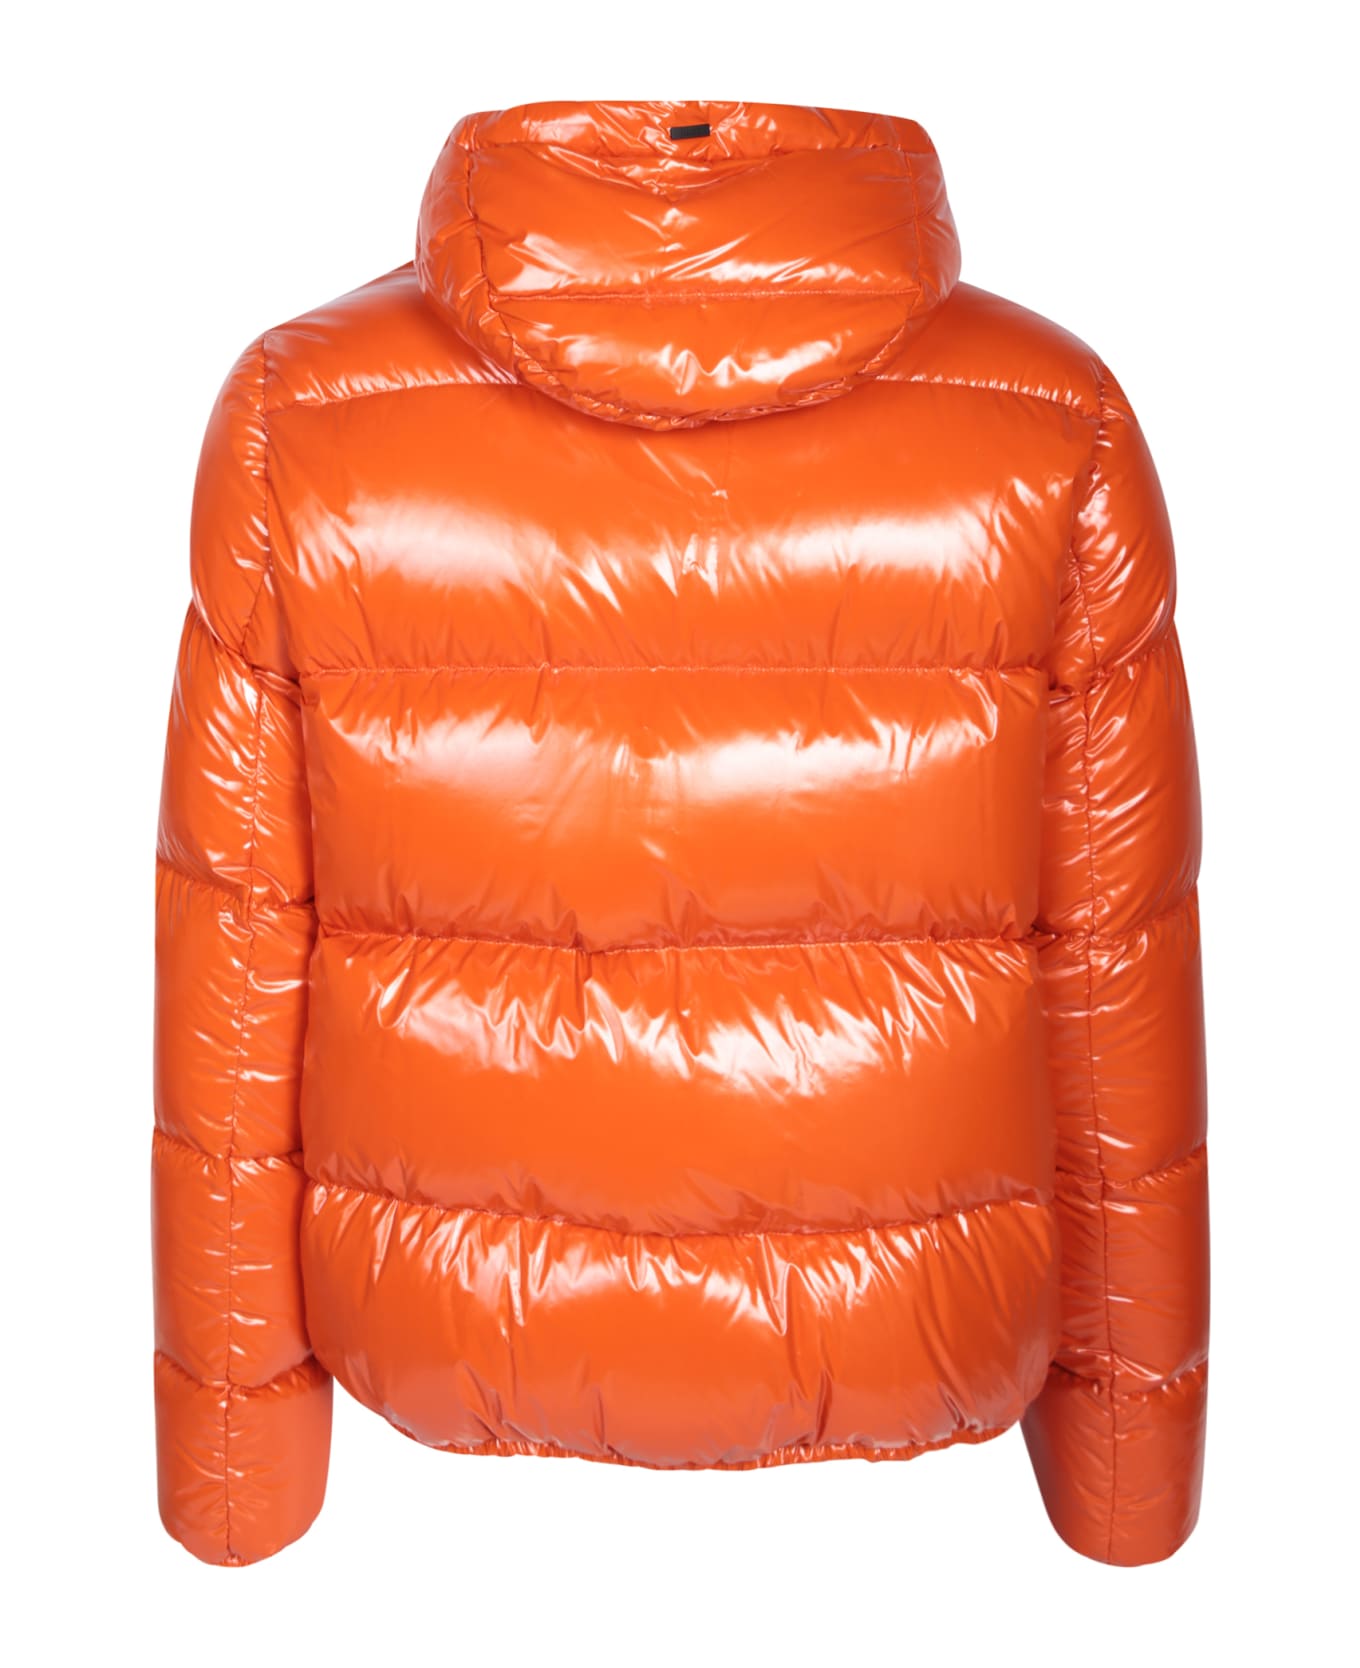 Herno Orange Gloss Bomber Jacket - Orange ダウンジャケット